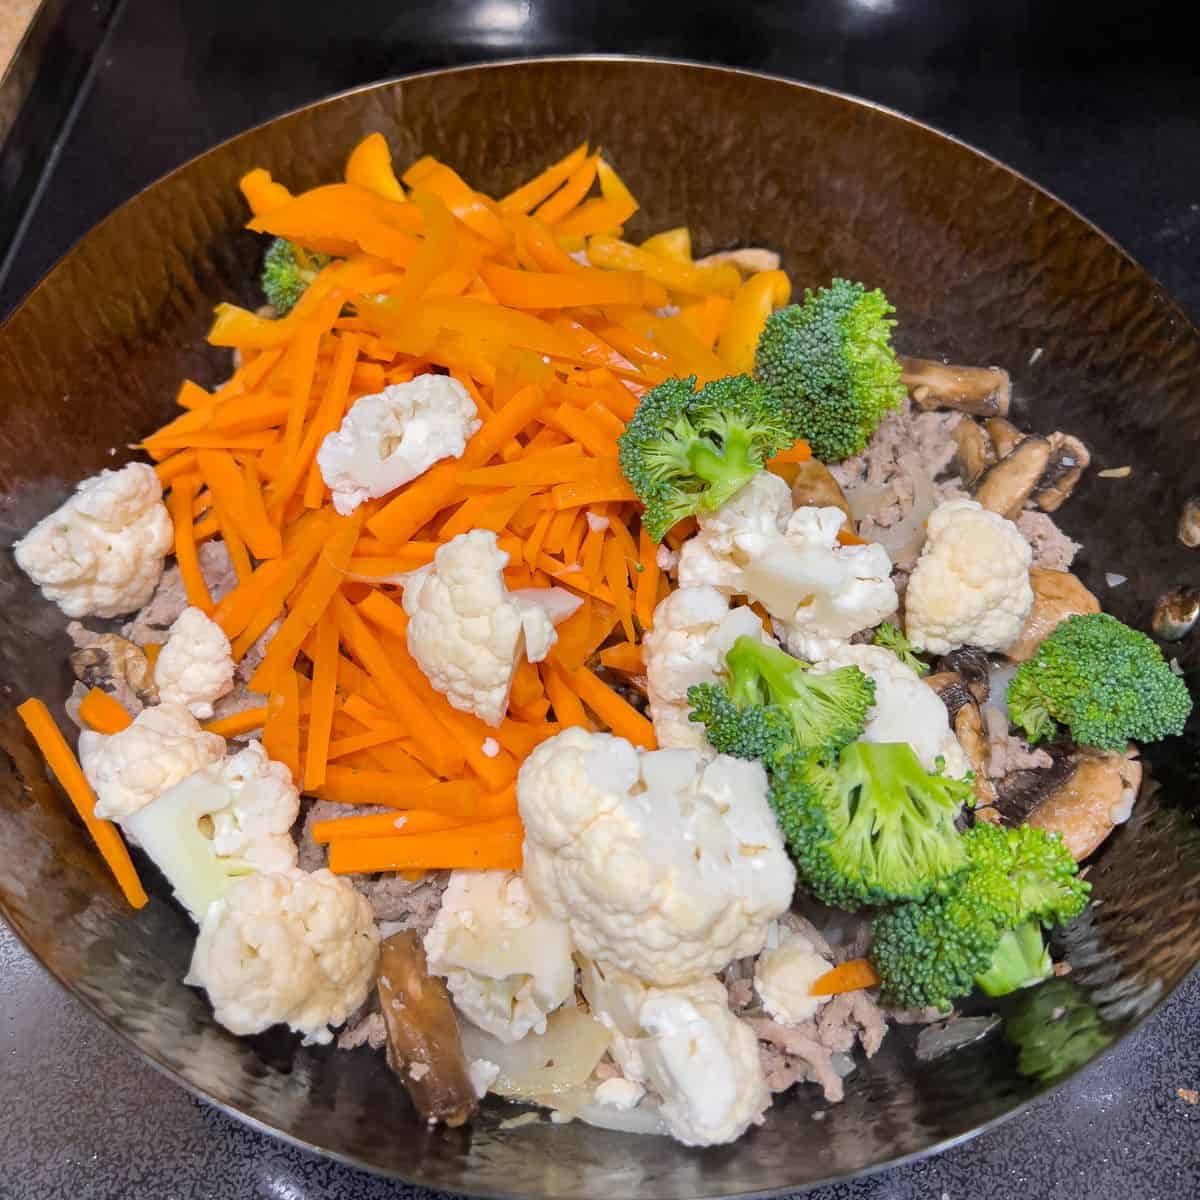 Stir fry carrots, broccoli and cauliflower.